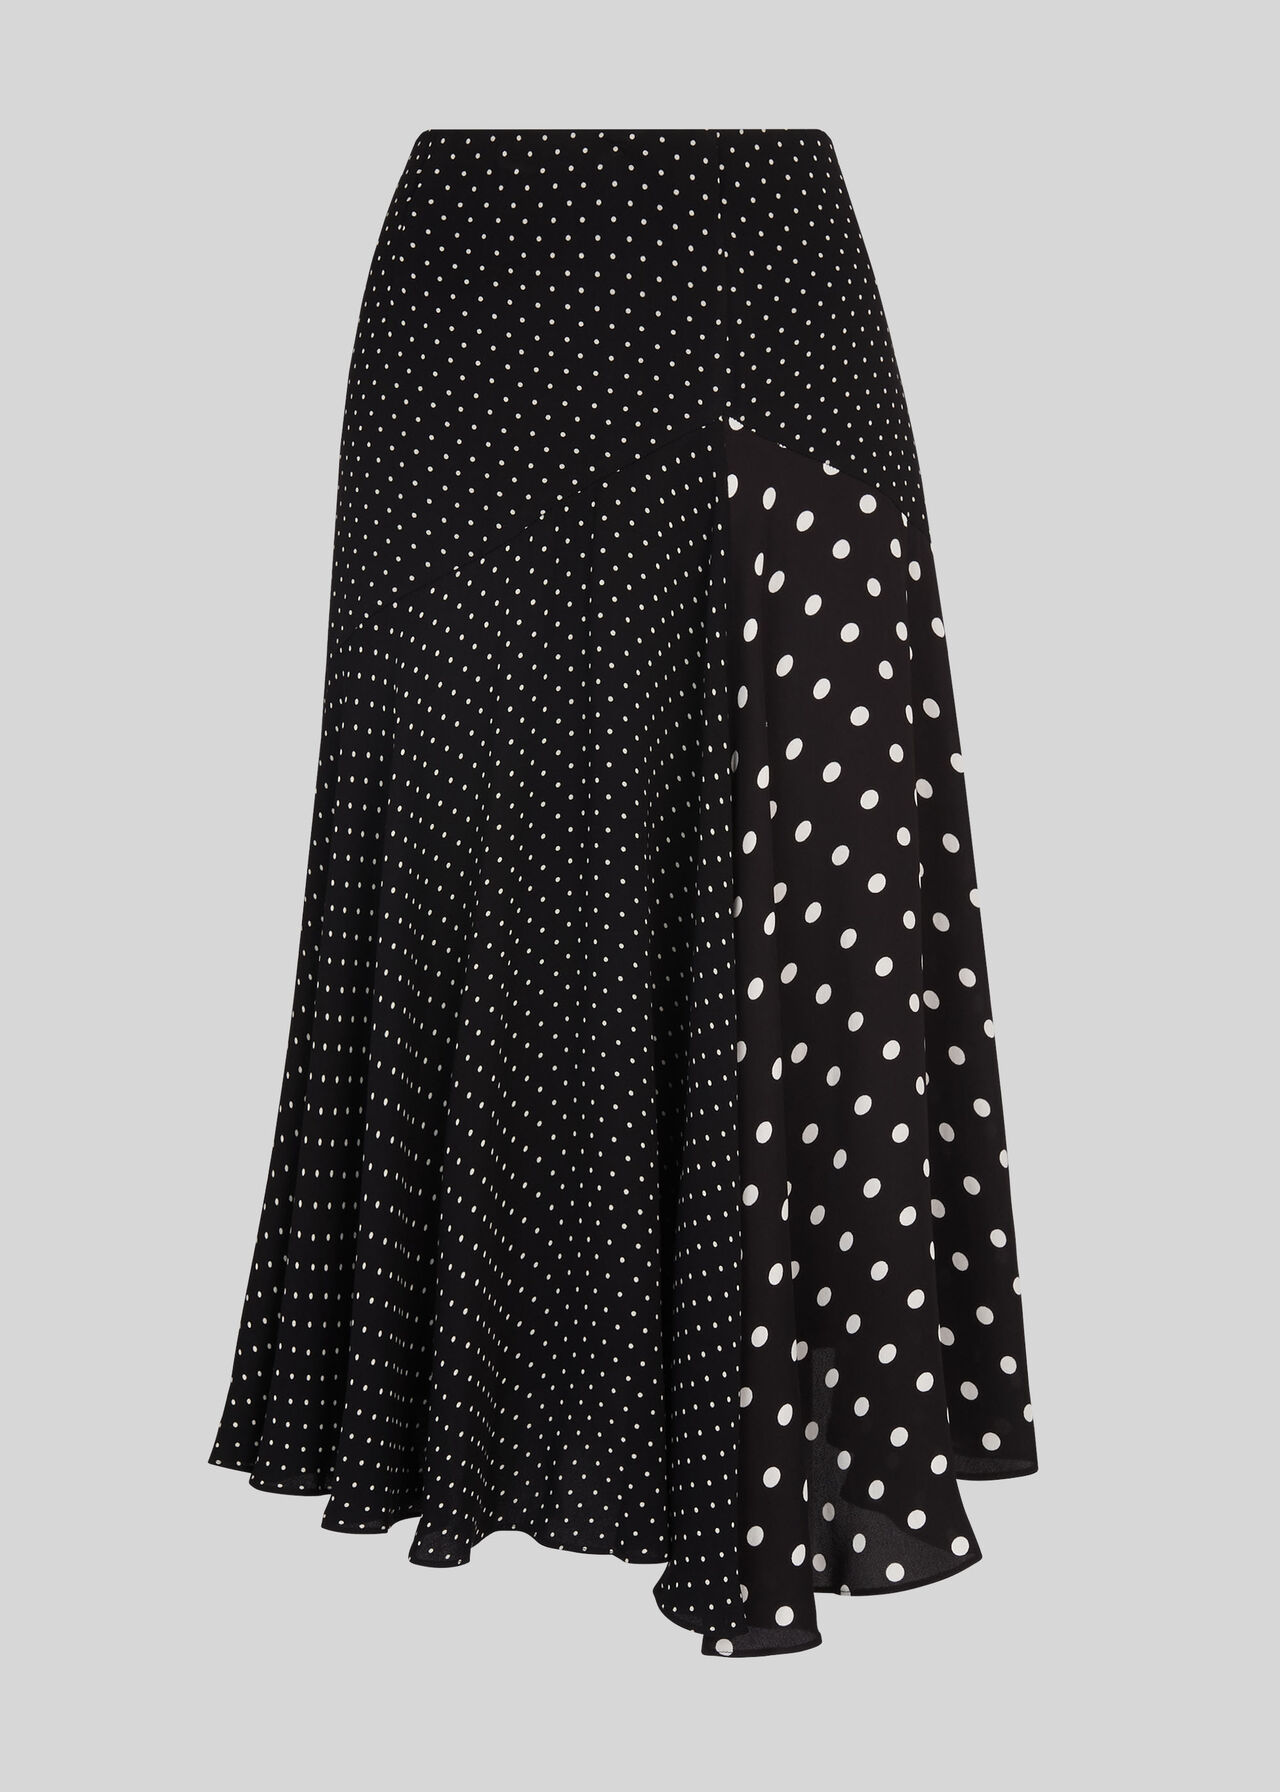 Black And White Spot Print Asymmetric Skirt | WHISTLES